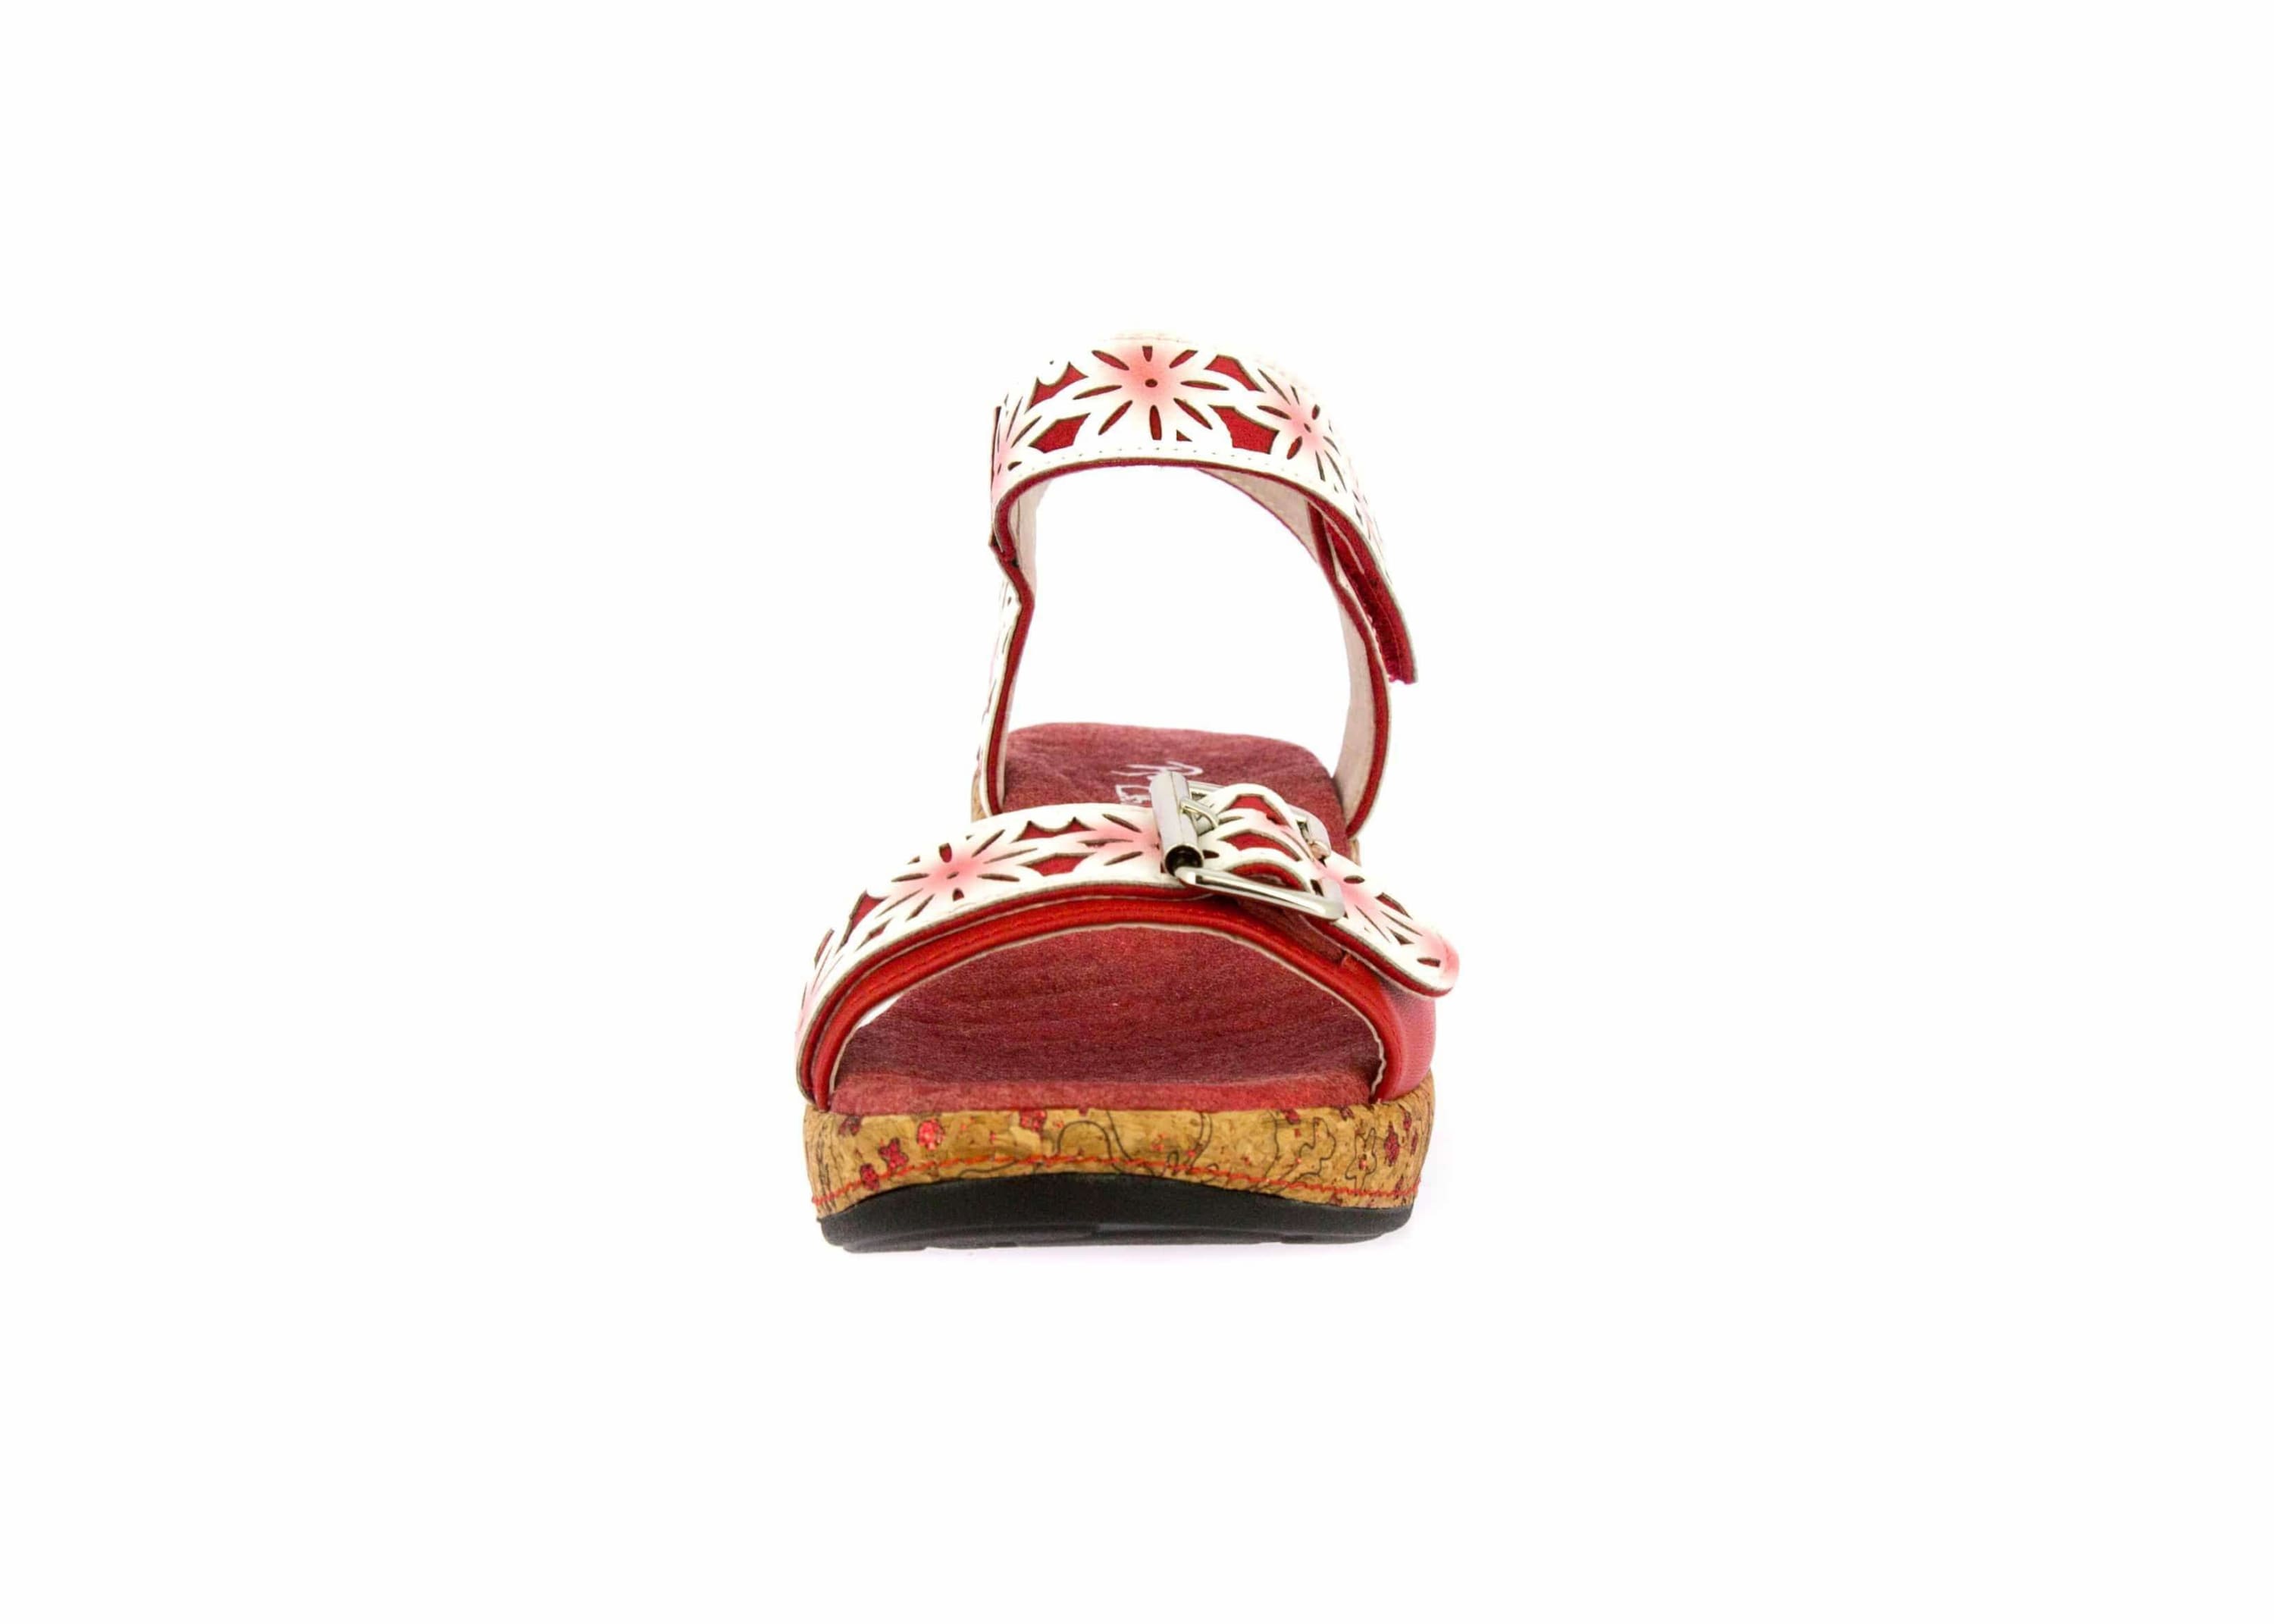 Rode schoen Laura FACRDOTO 019 - Sandaal